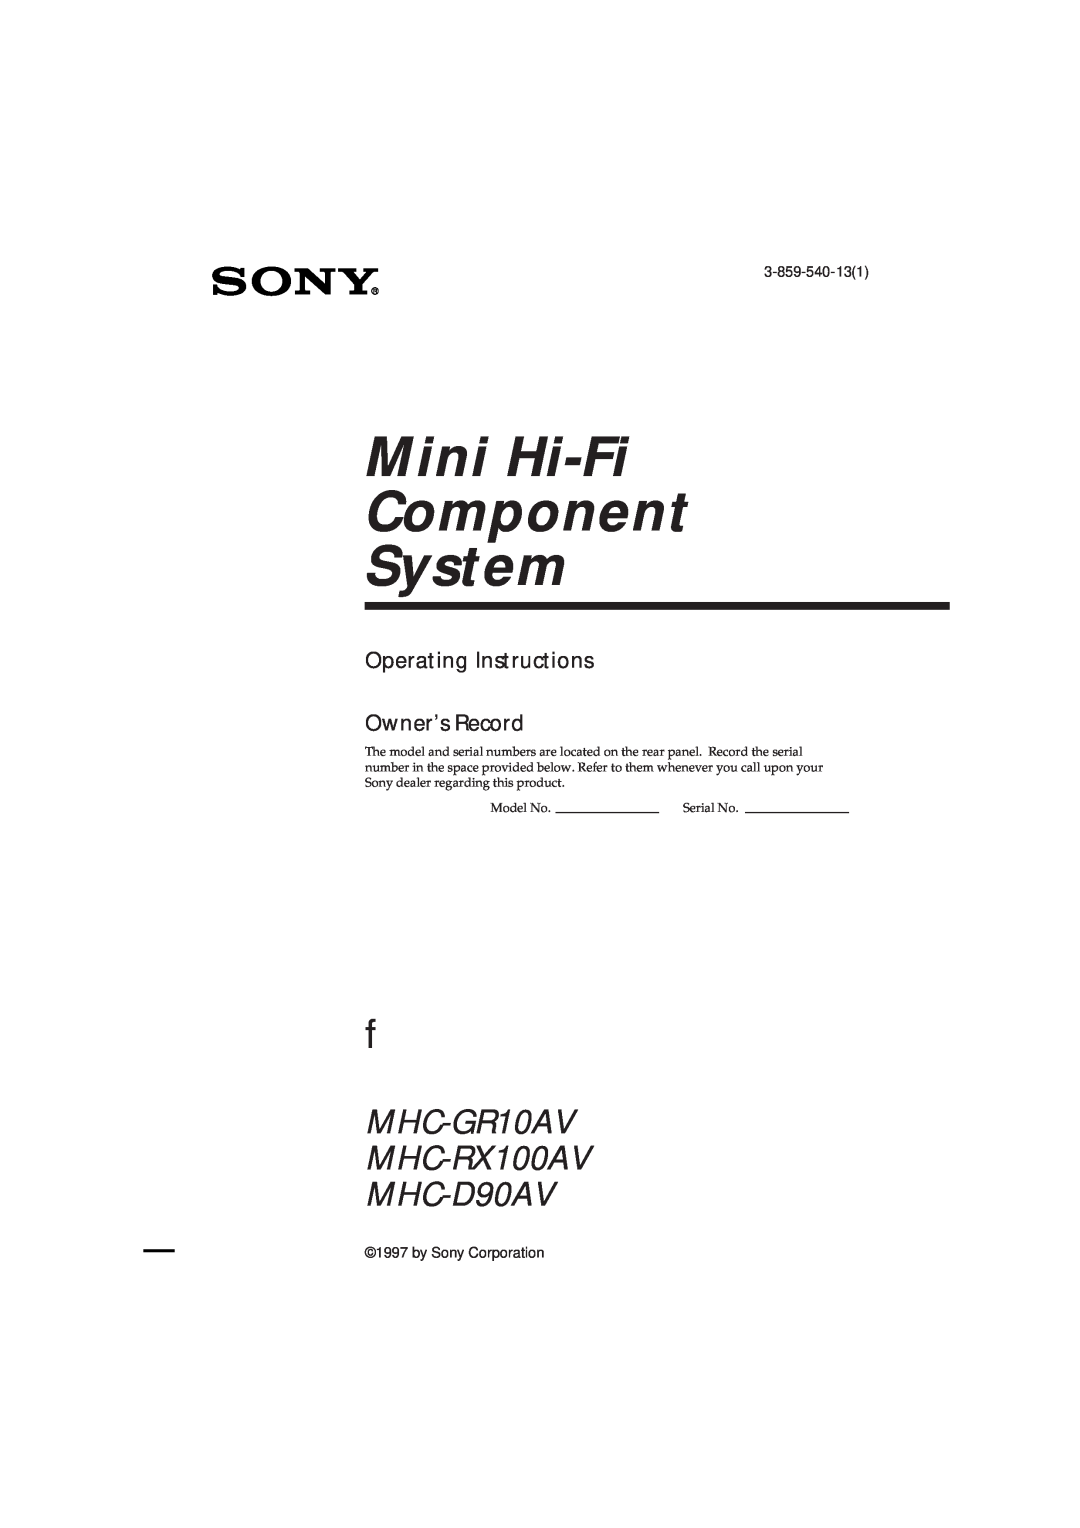 Sony MHC-D90AV, MHC-GR10AV operating instructions 3-859-540-131, by Sony Corporation, Mini Hi-Fi Component System 